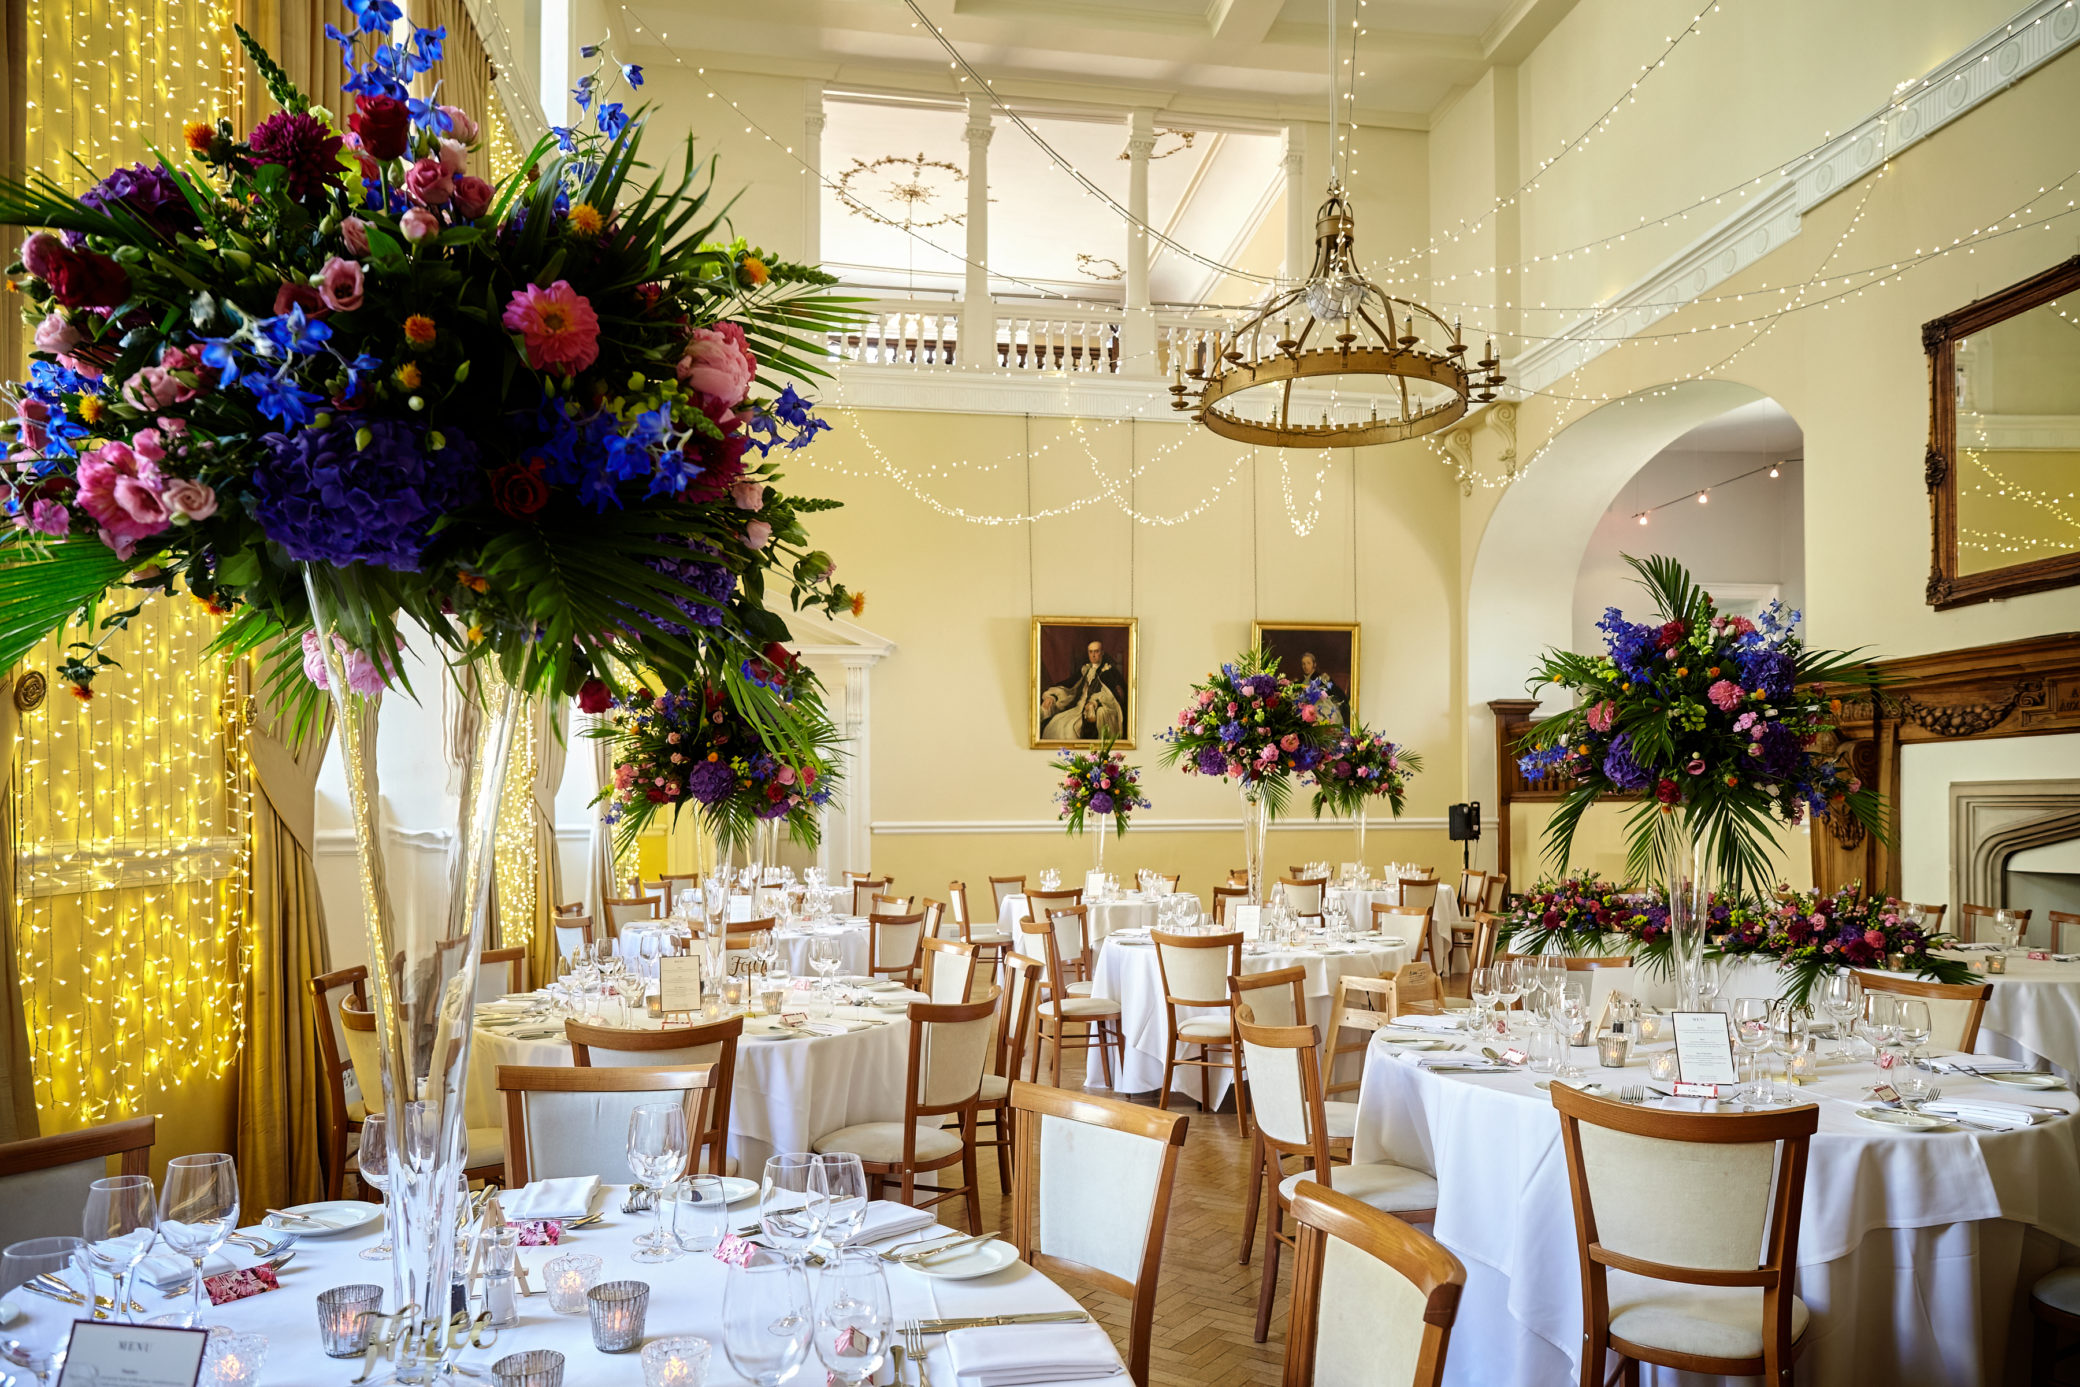 High wedding flowers in vases at Farnham Castle in Surrey